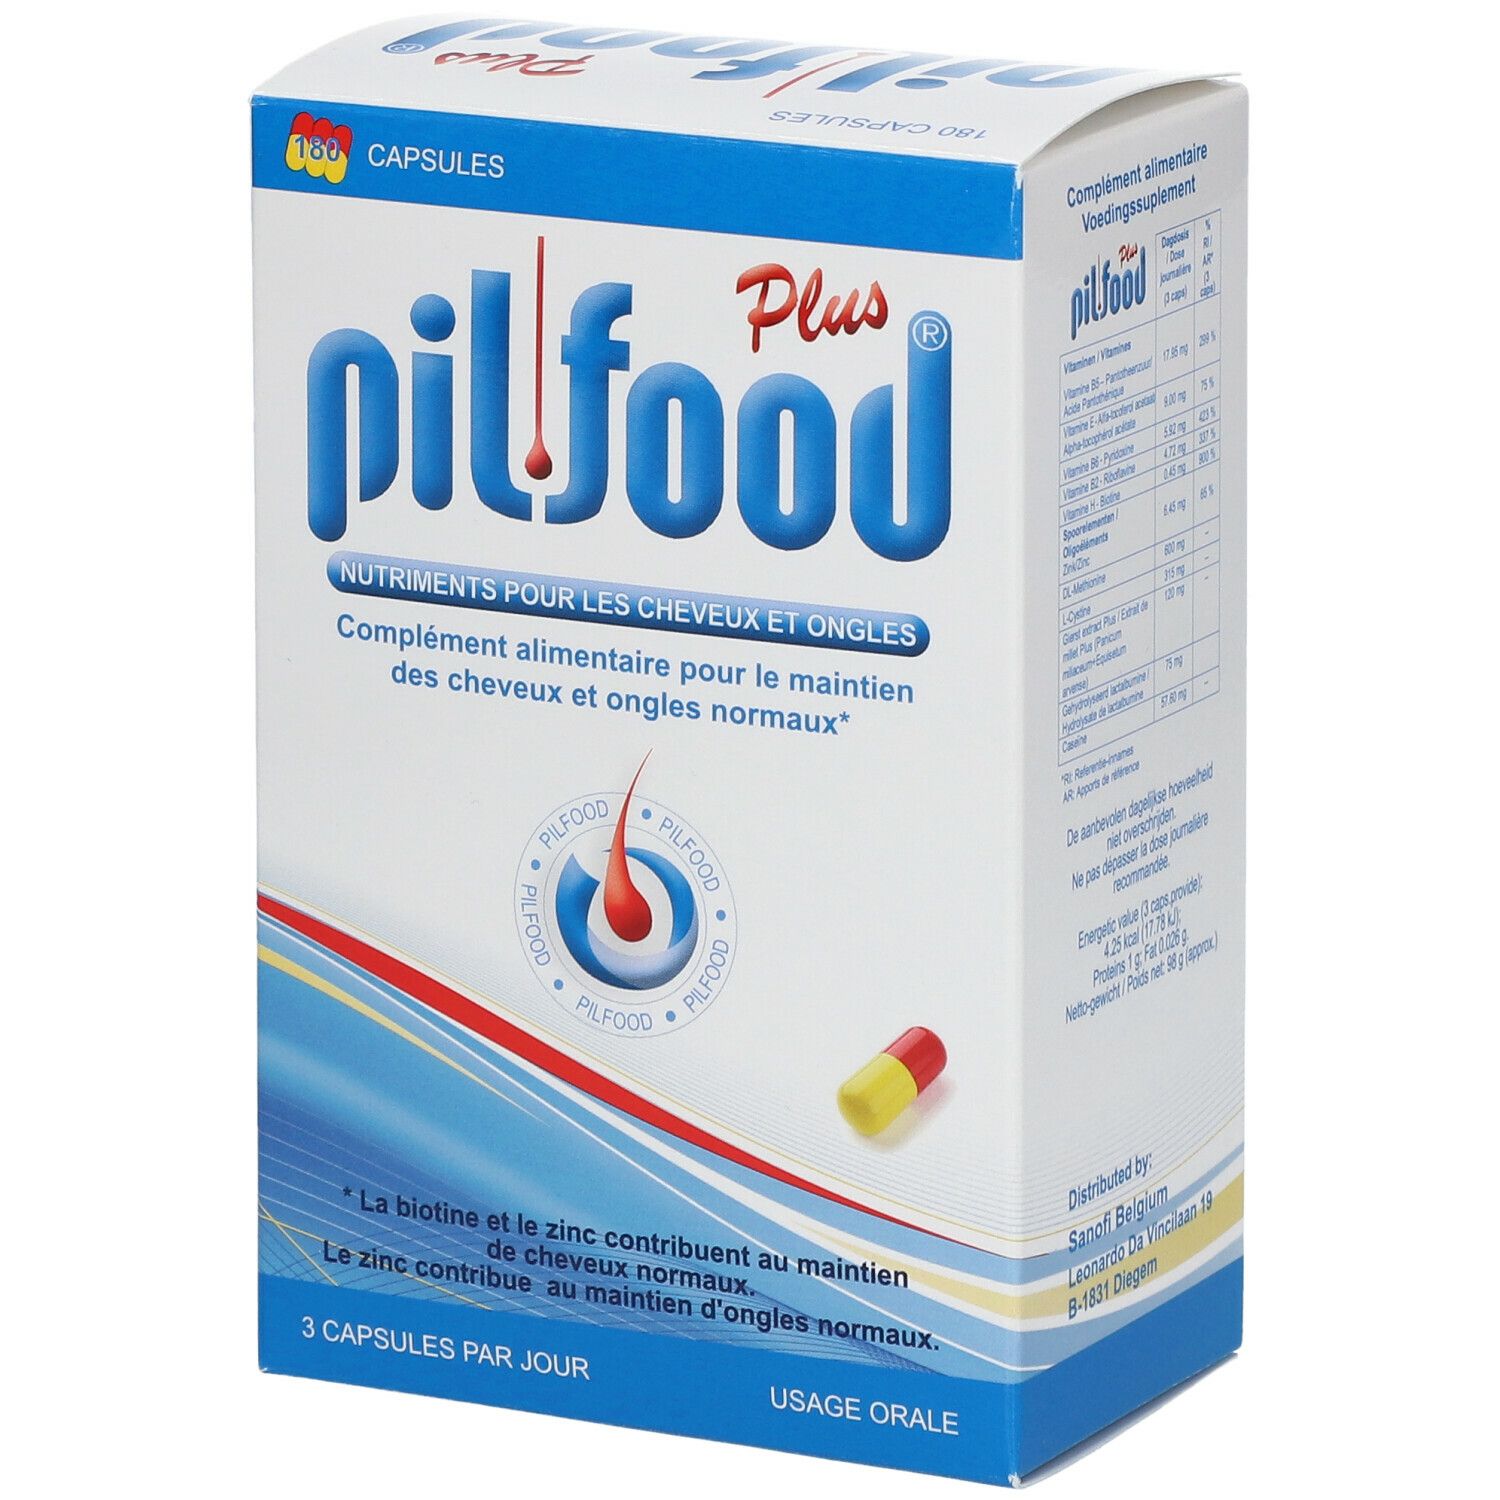 Pilfood Plus